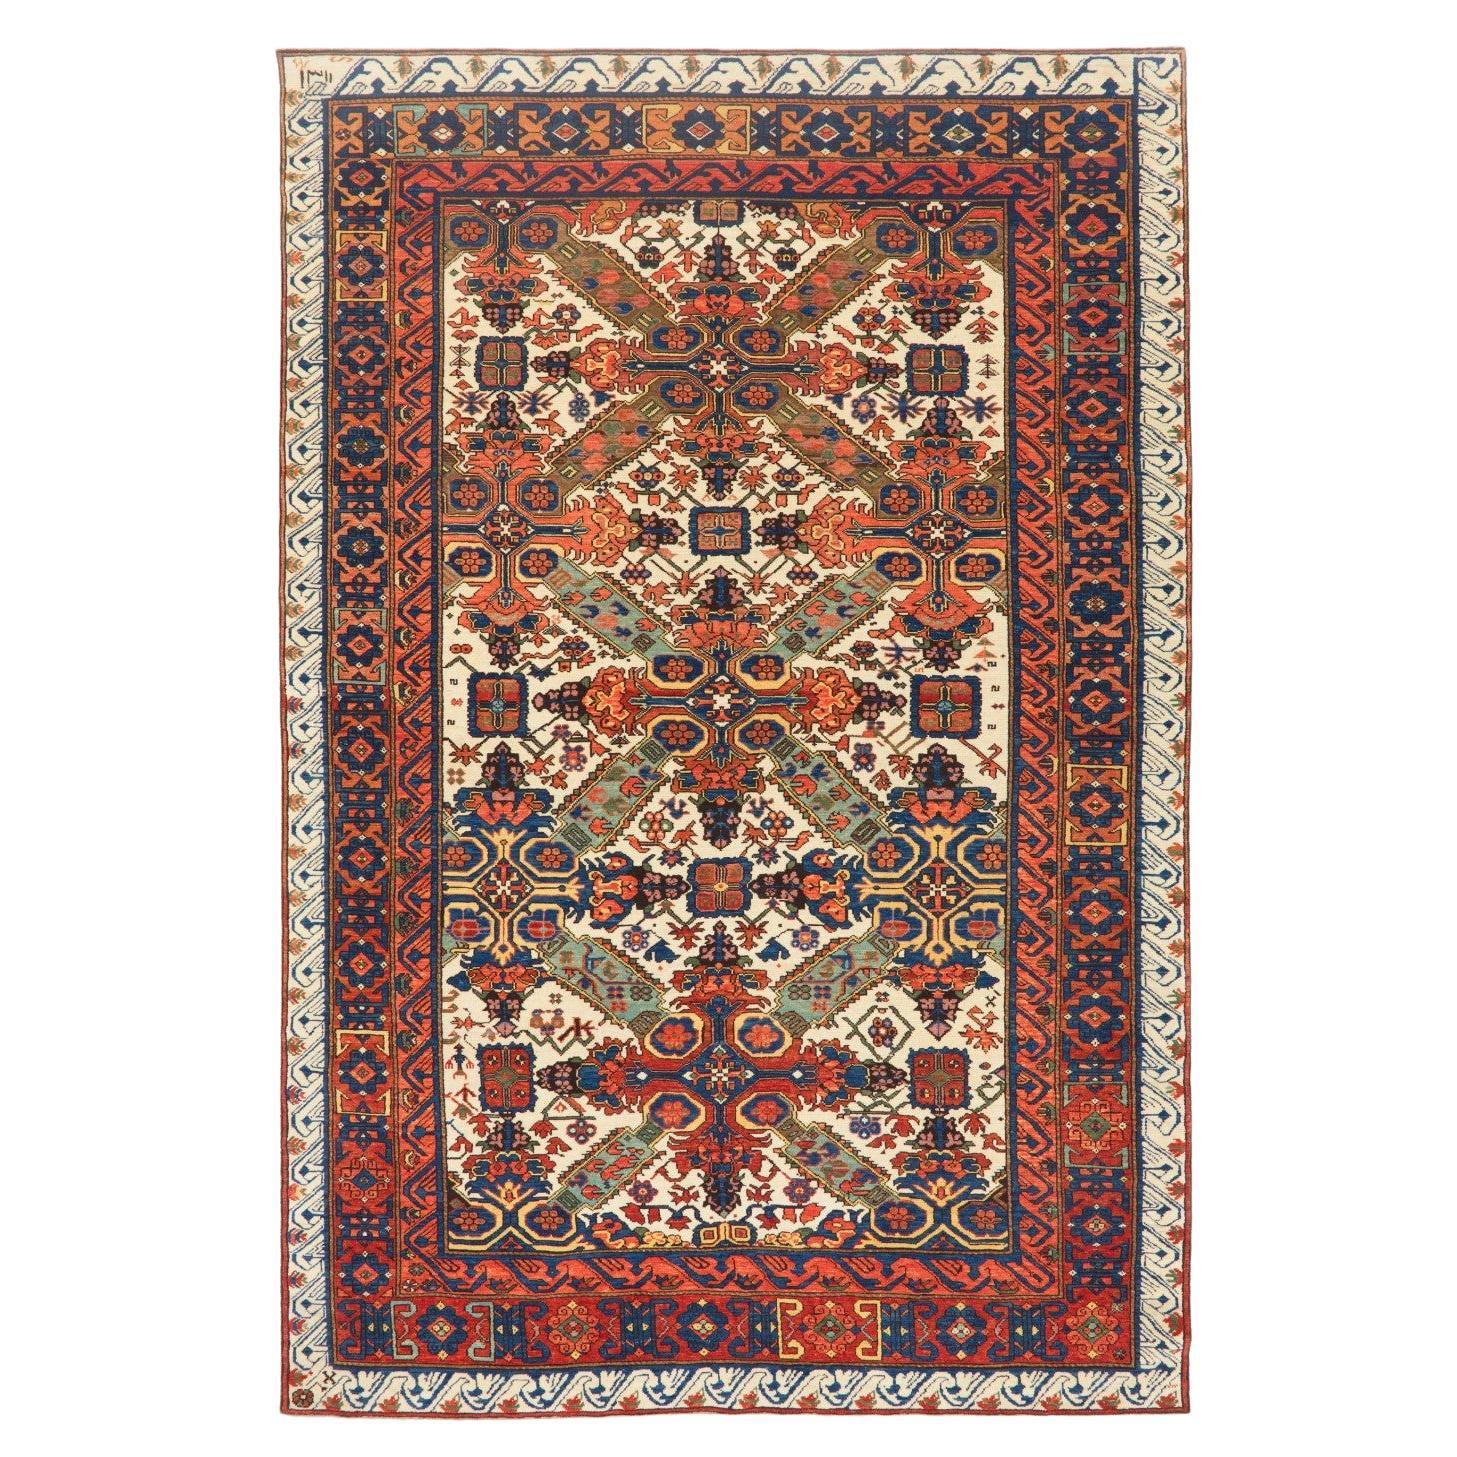 Ararat Rugs Seichur Kuba Rug Caucasian Antique Kazak Revival Carpet Natural Dyed For Sale